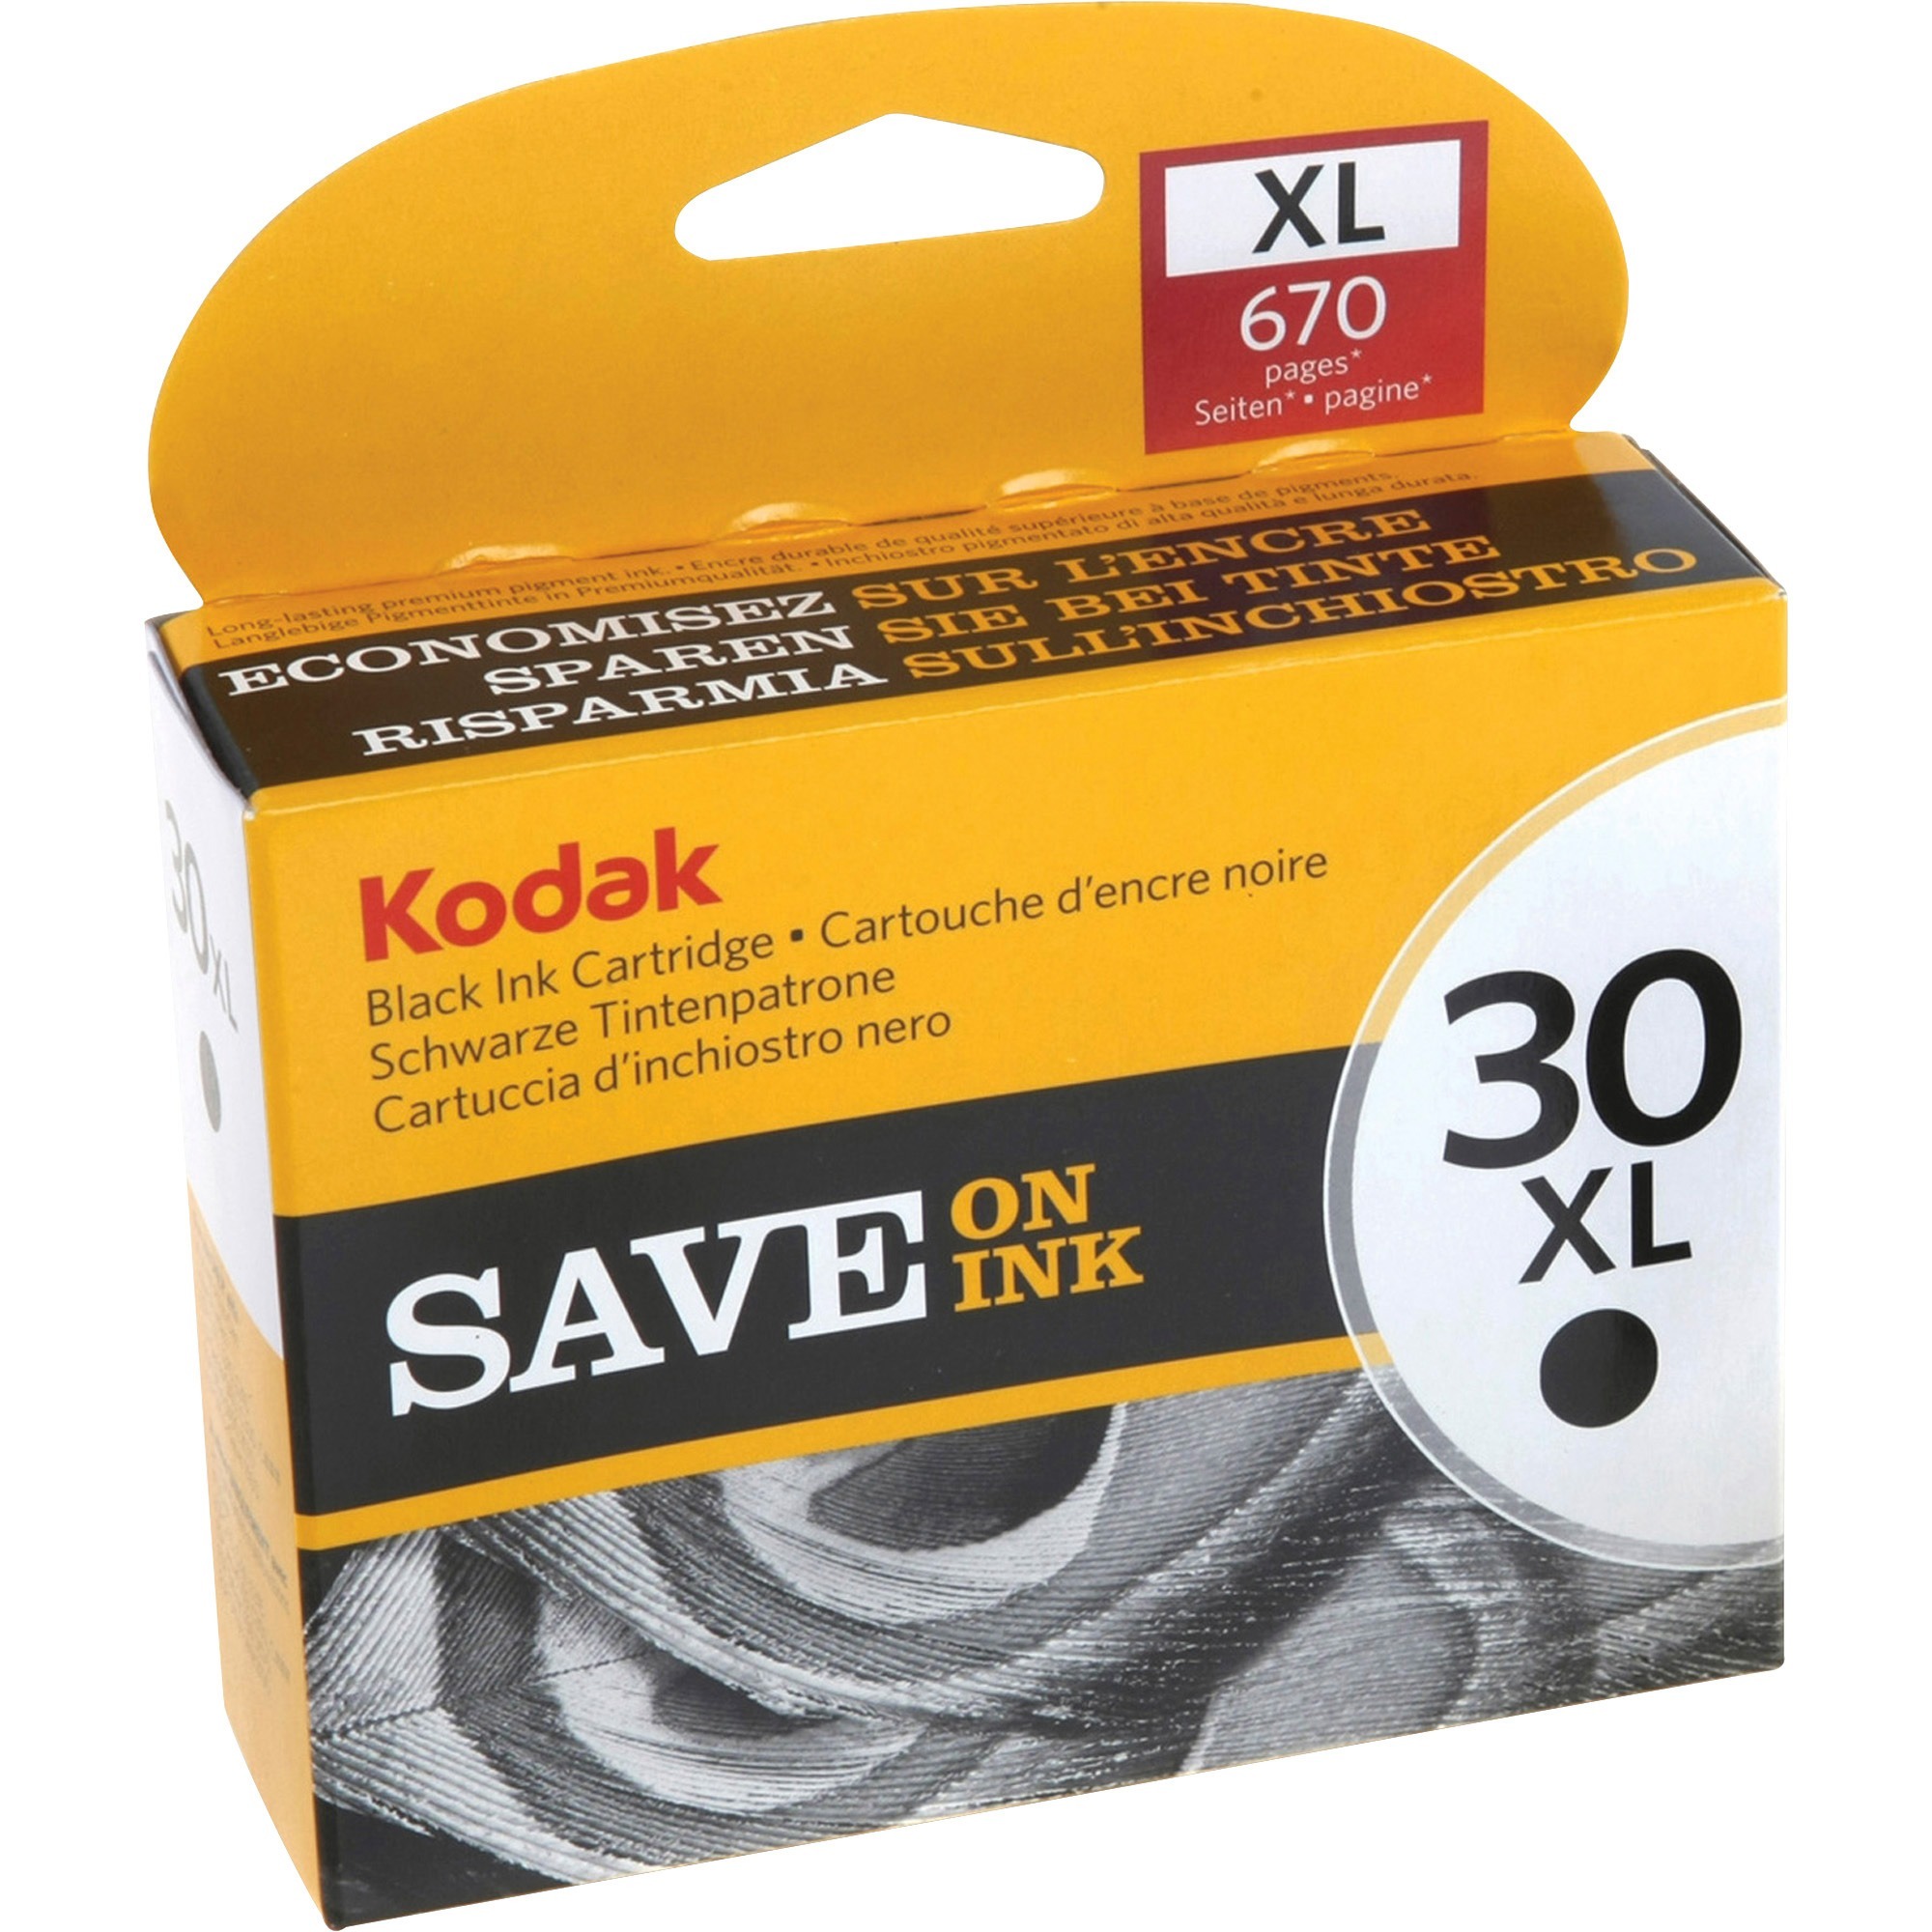 Kodak No 30xl Original Ink Cartridge Kod1550532 4835